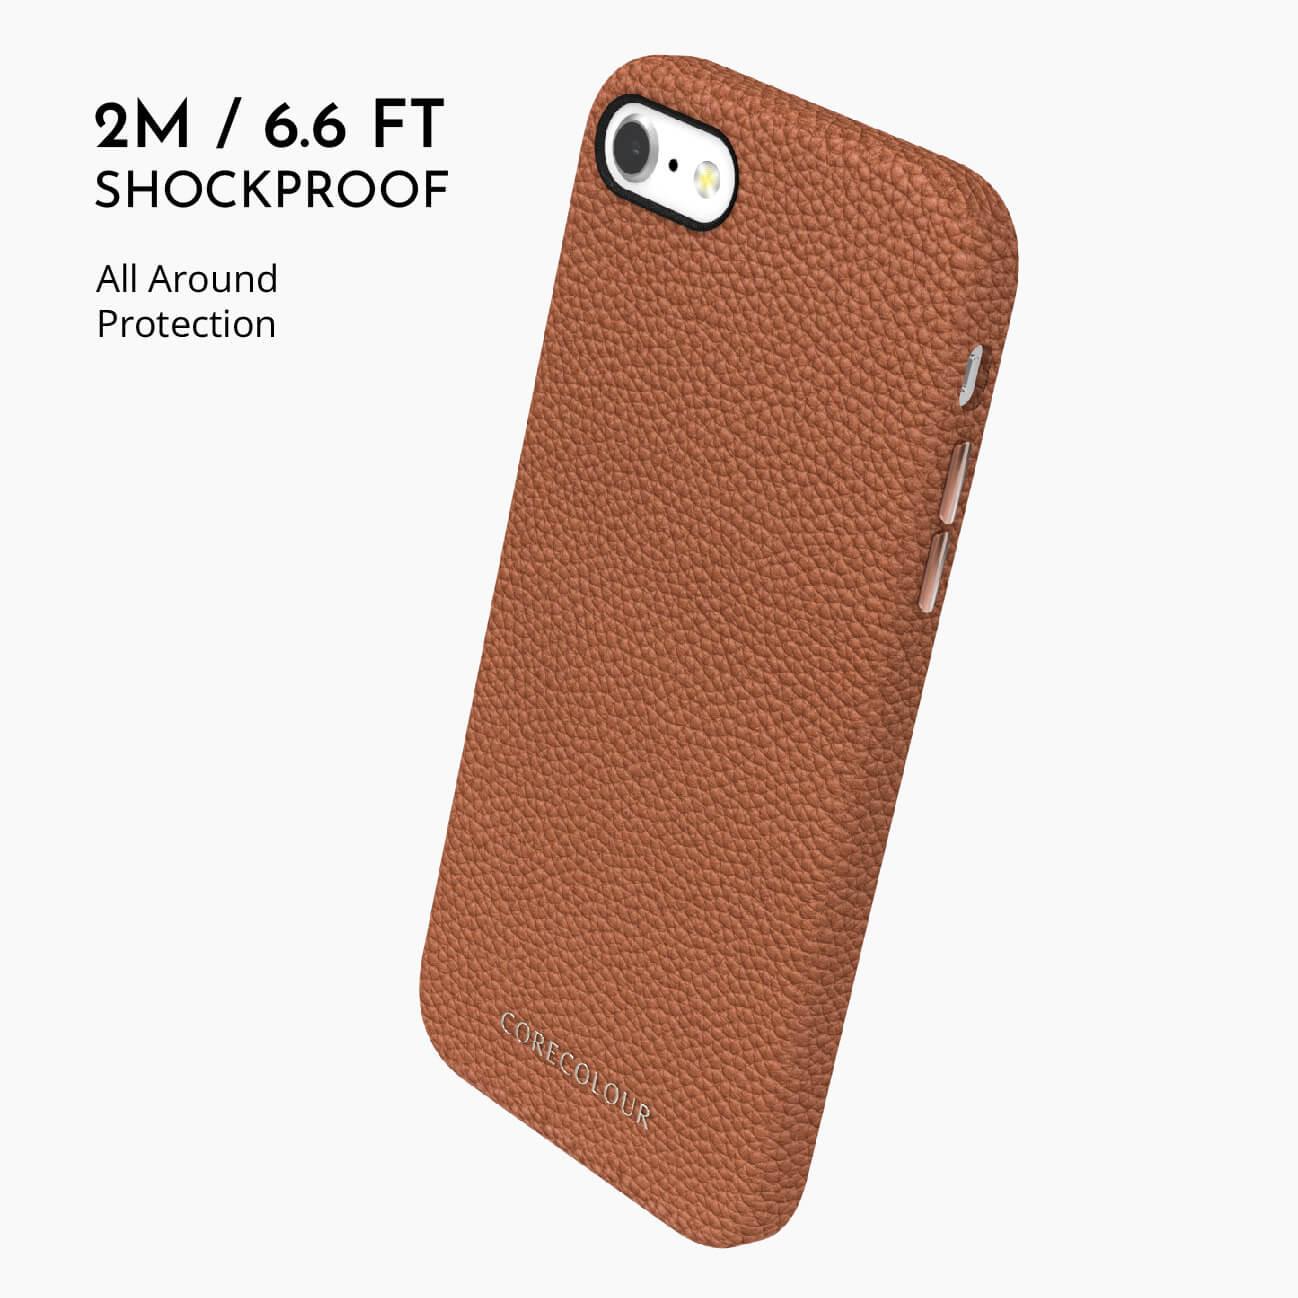 iPhone 8 Brown Premium Leather Phone Case - CORECOLOUR